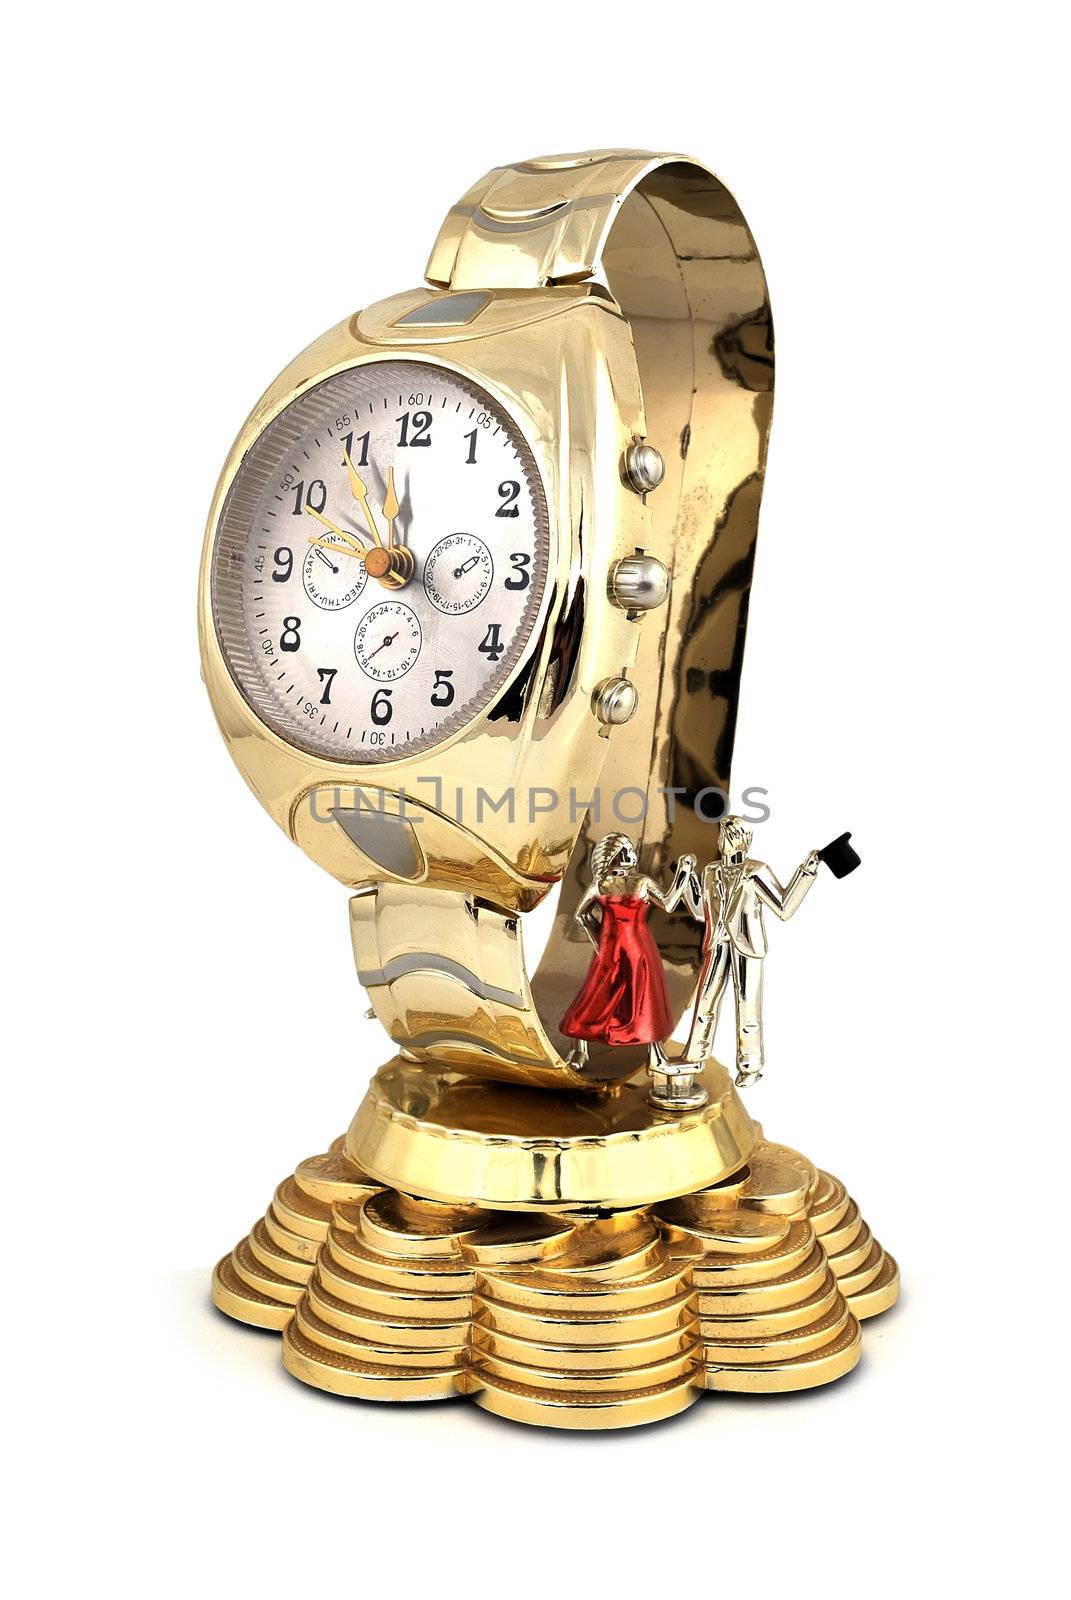 decorative gold watch by vetkit